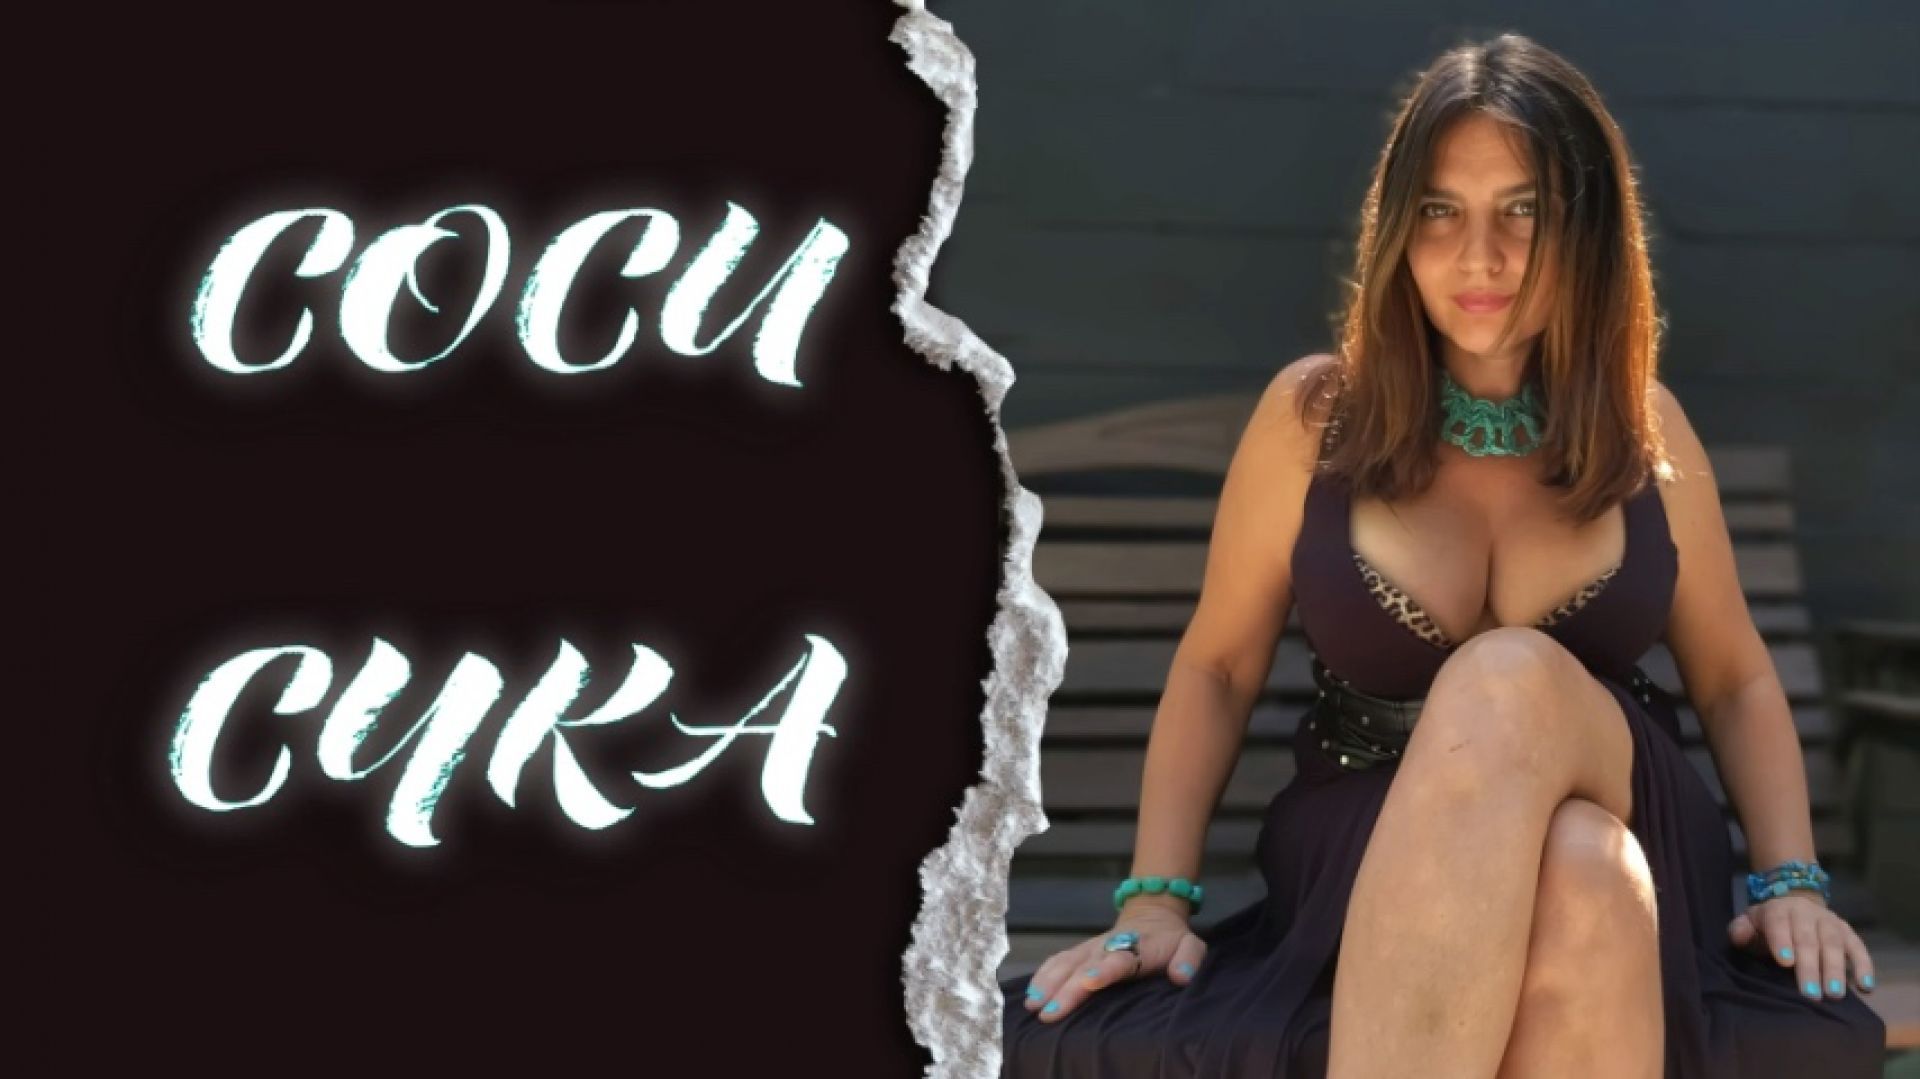 COCU CYKA by Domina Paulina